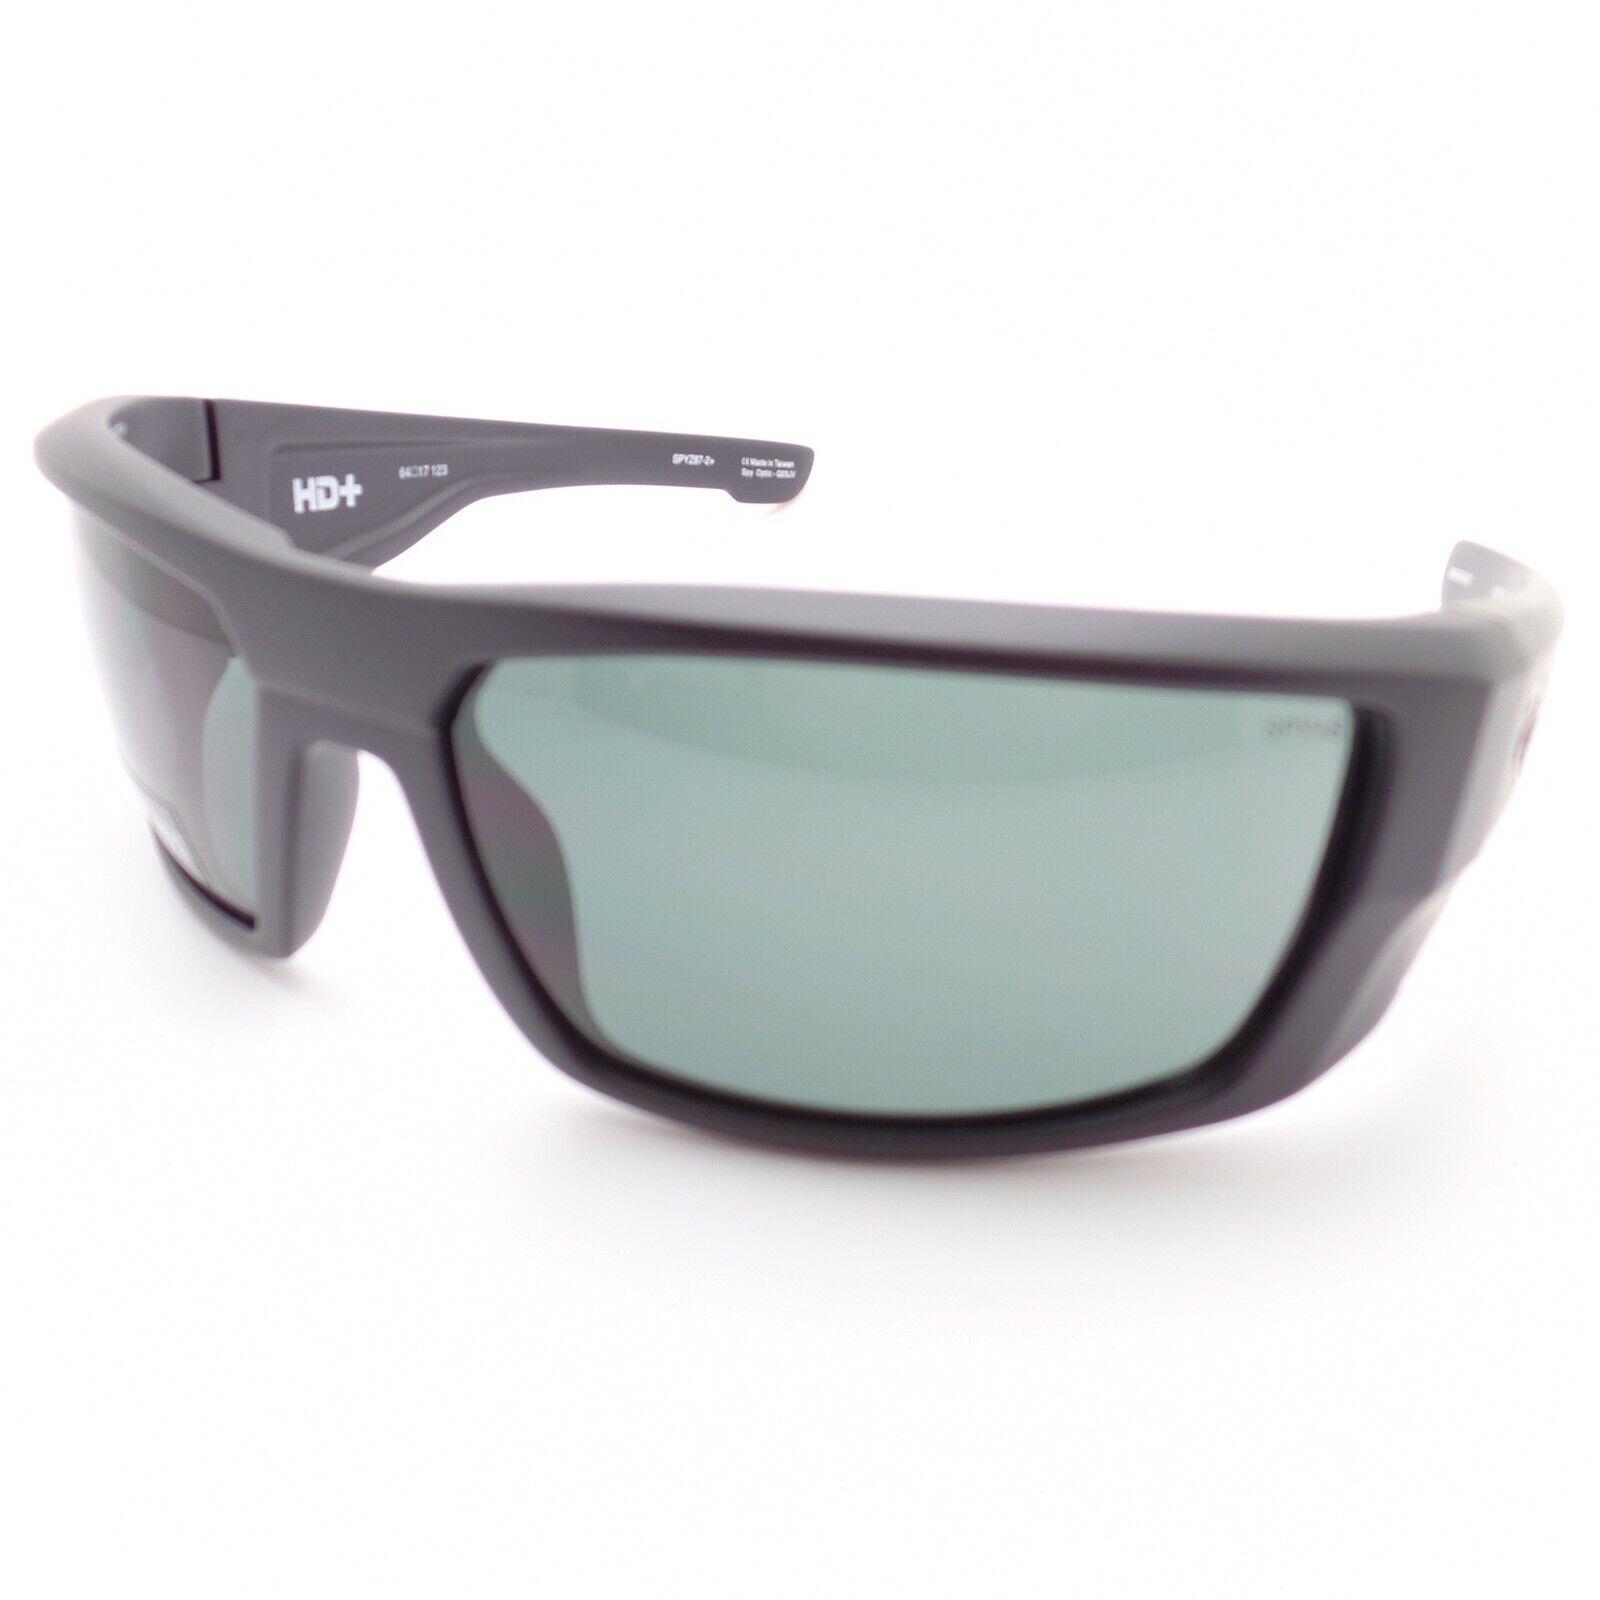 Spy Optics Dirk Sosi Ansirx Matte Black Hd+ Grey Green Sunglasses